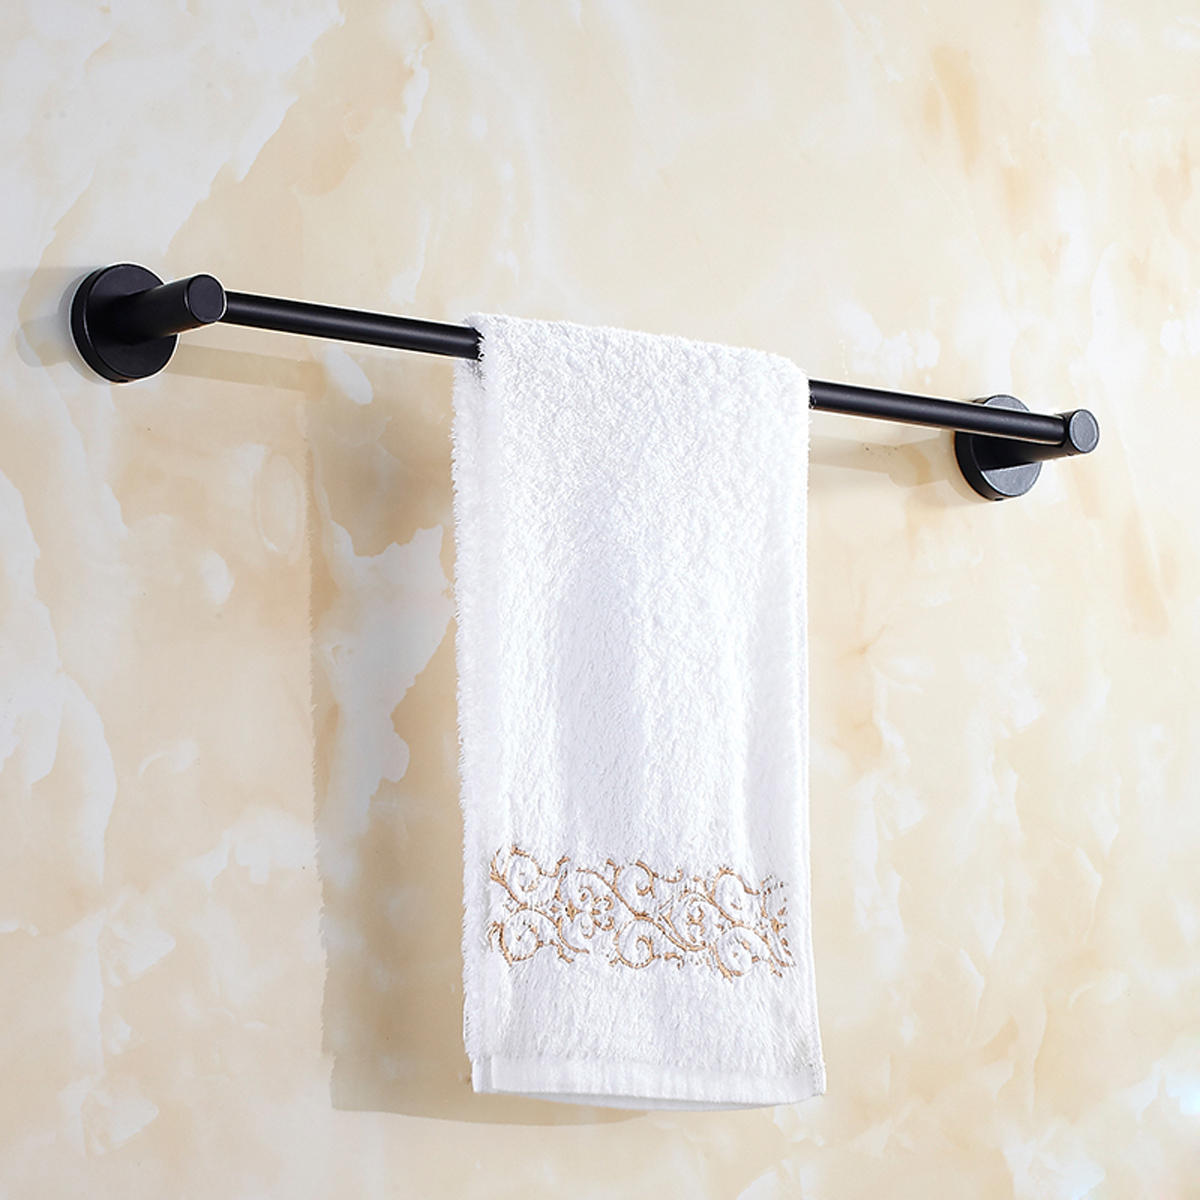 Black Hand Toalla Rail Rack Gancho Toilet Cepillo Paper Holder para Cuarto de baño Accessories